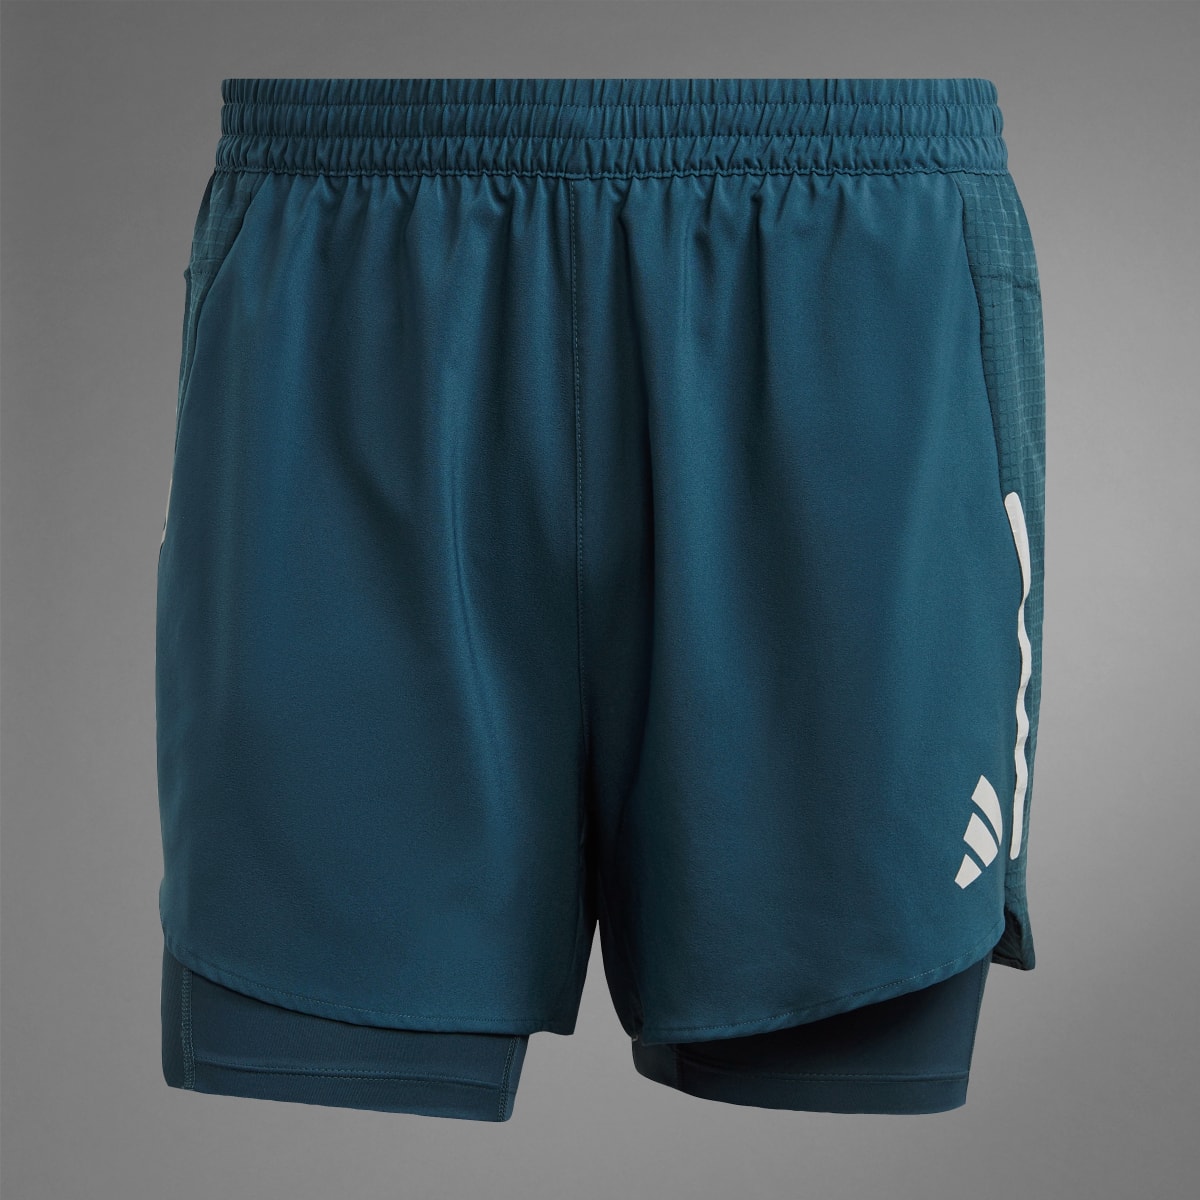 Adidas Designed 4 Running 2-in-1 Shorts. 9